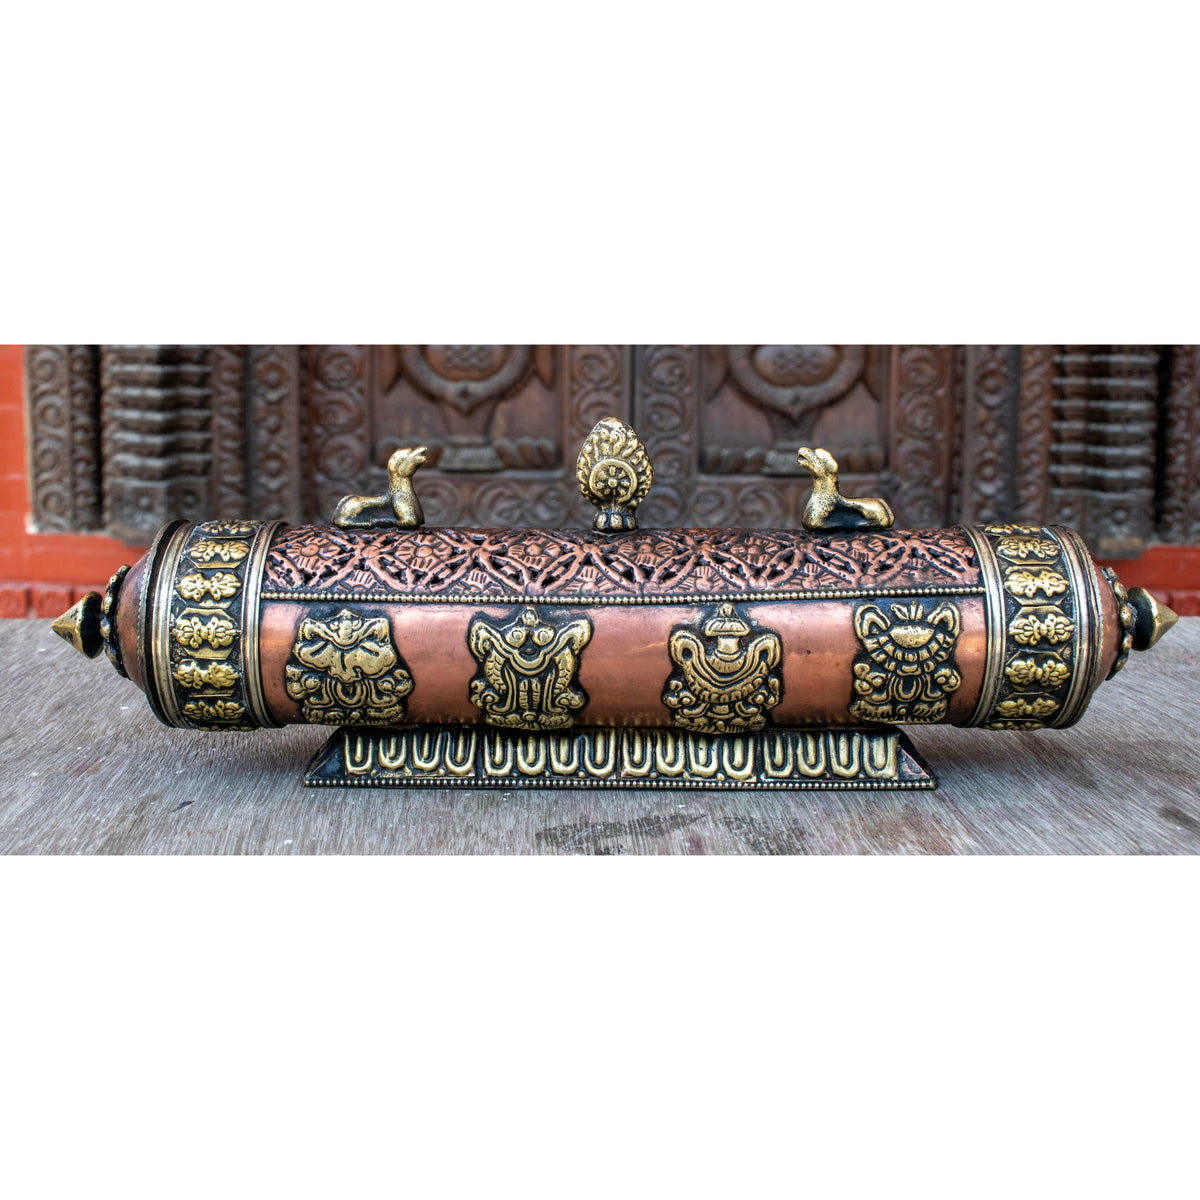 Tibetain Incense Burner